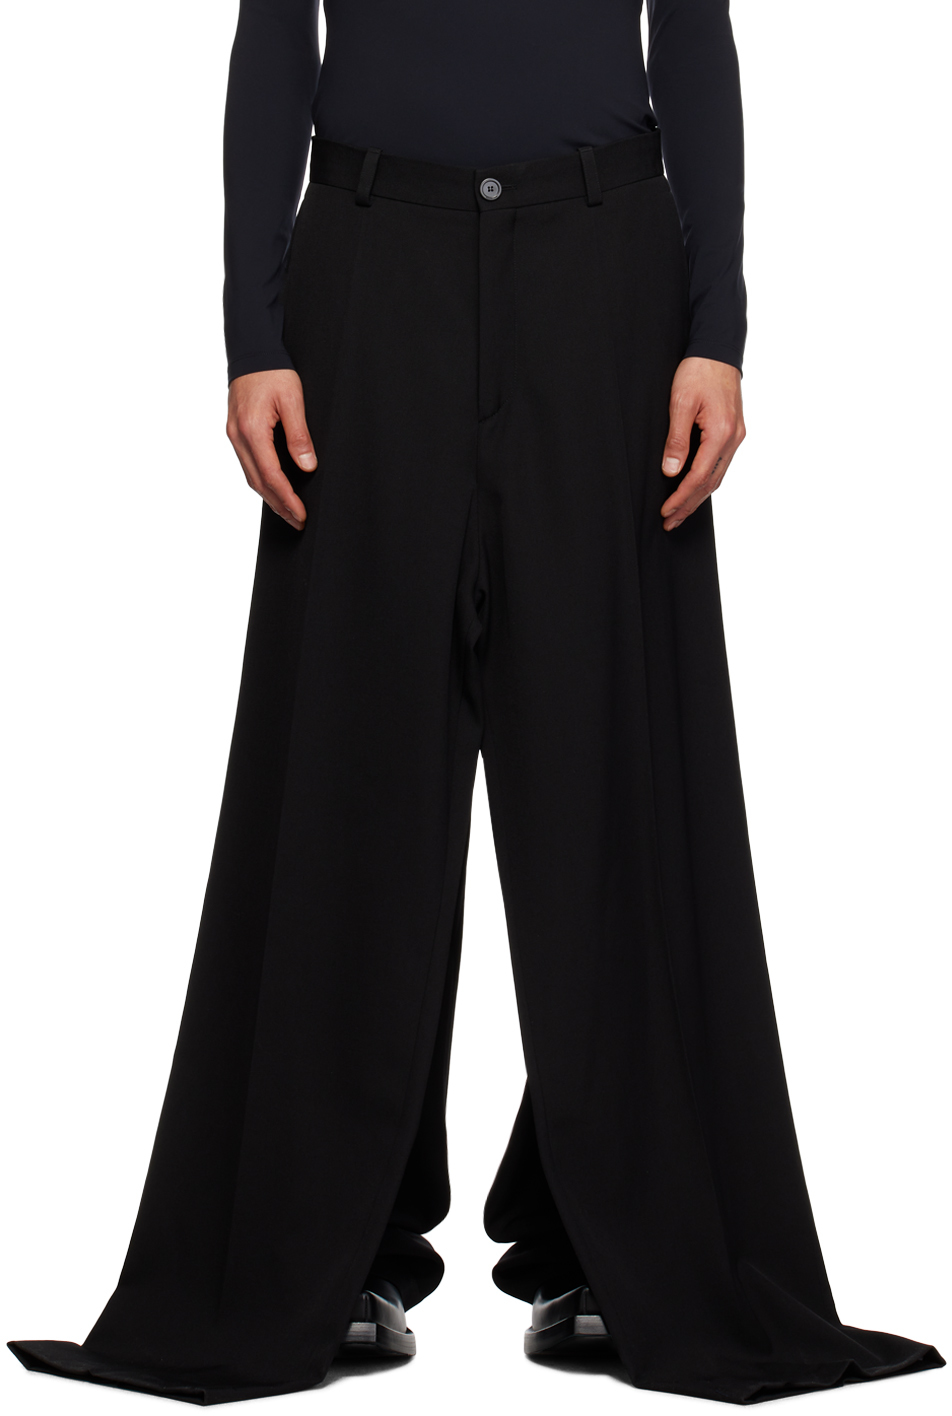 Balenciaga: Black Double Front Trousers | SSENSE Canada